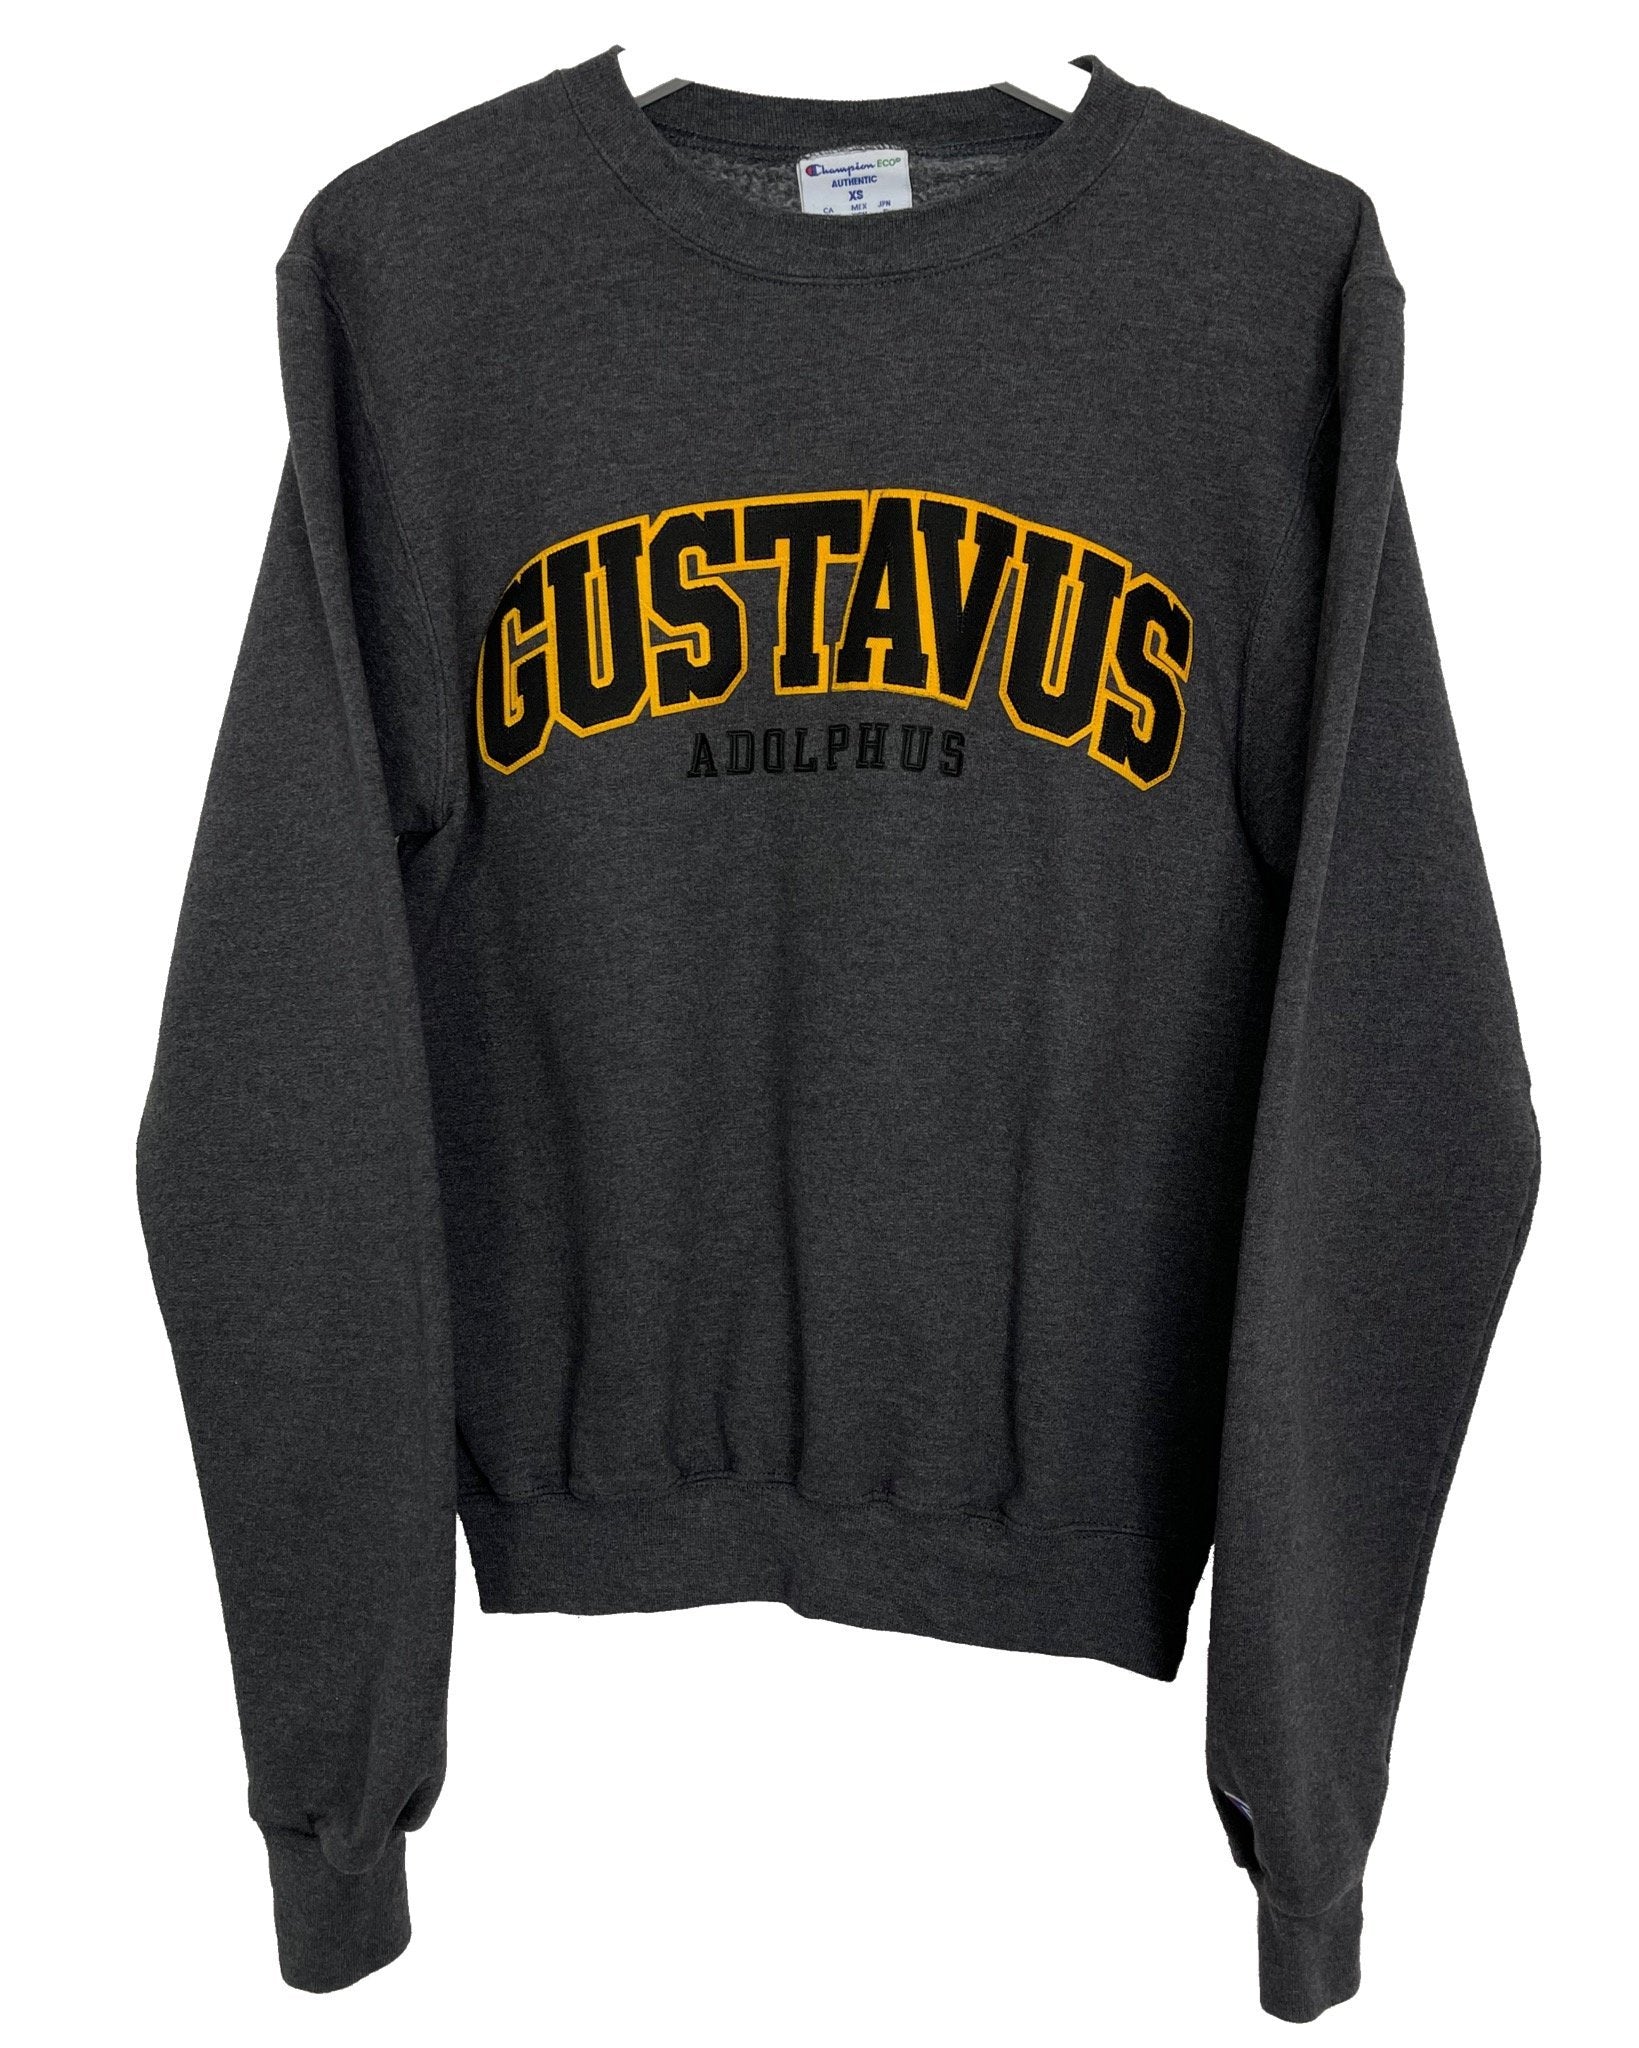  Sweatshirt Champion Sweat - Gustavus Adolphus College - XS - PLOMOSTORE